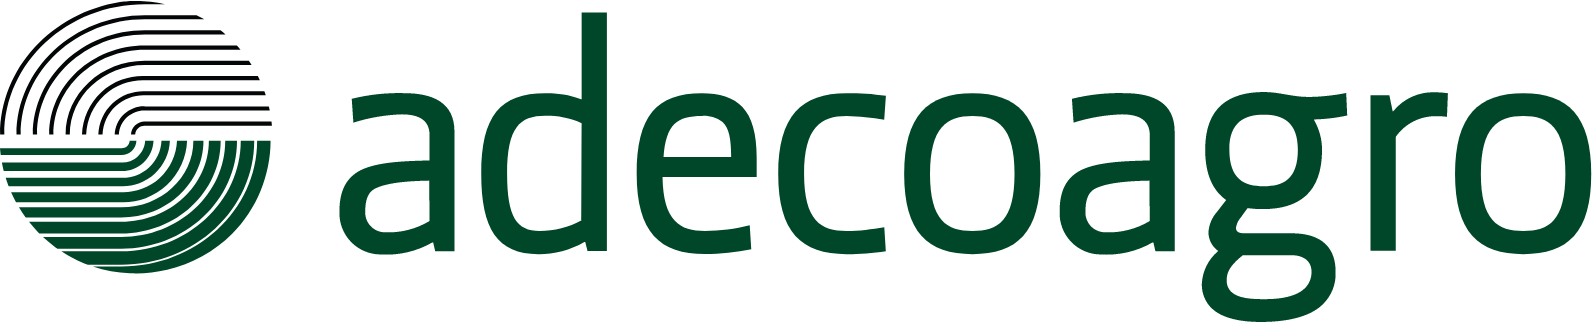 Adecoagro logo large (transparent PNG)